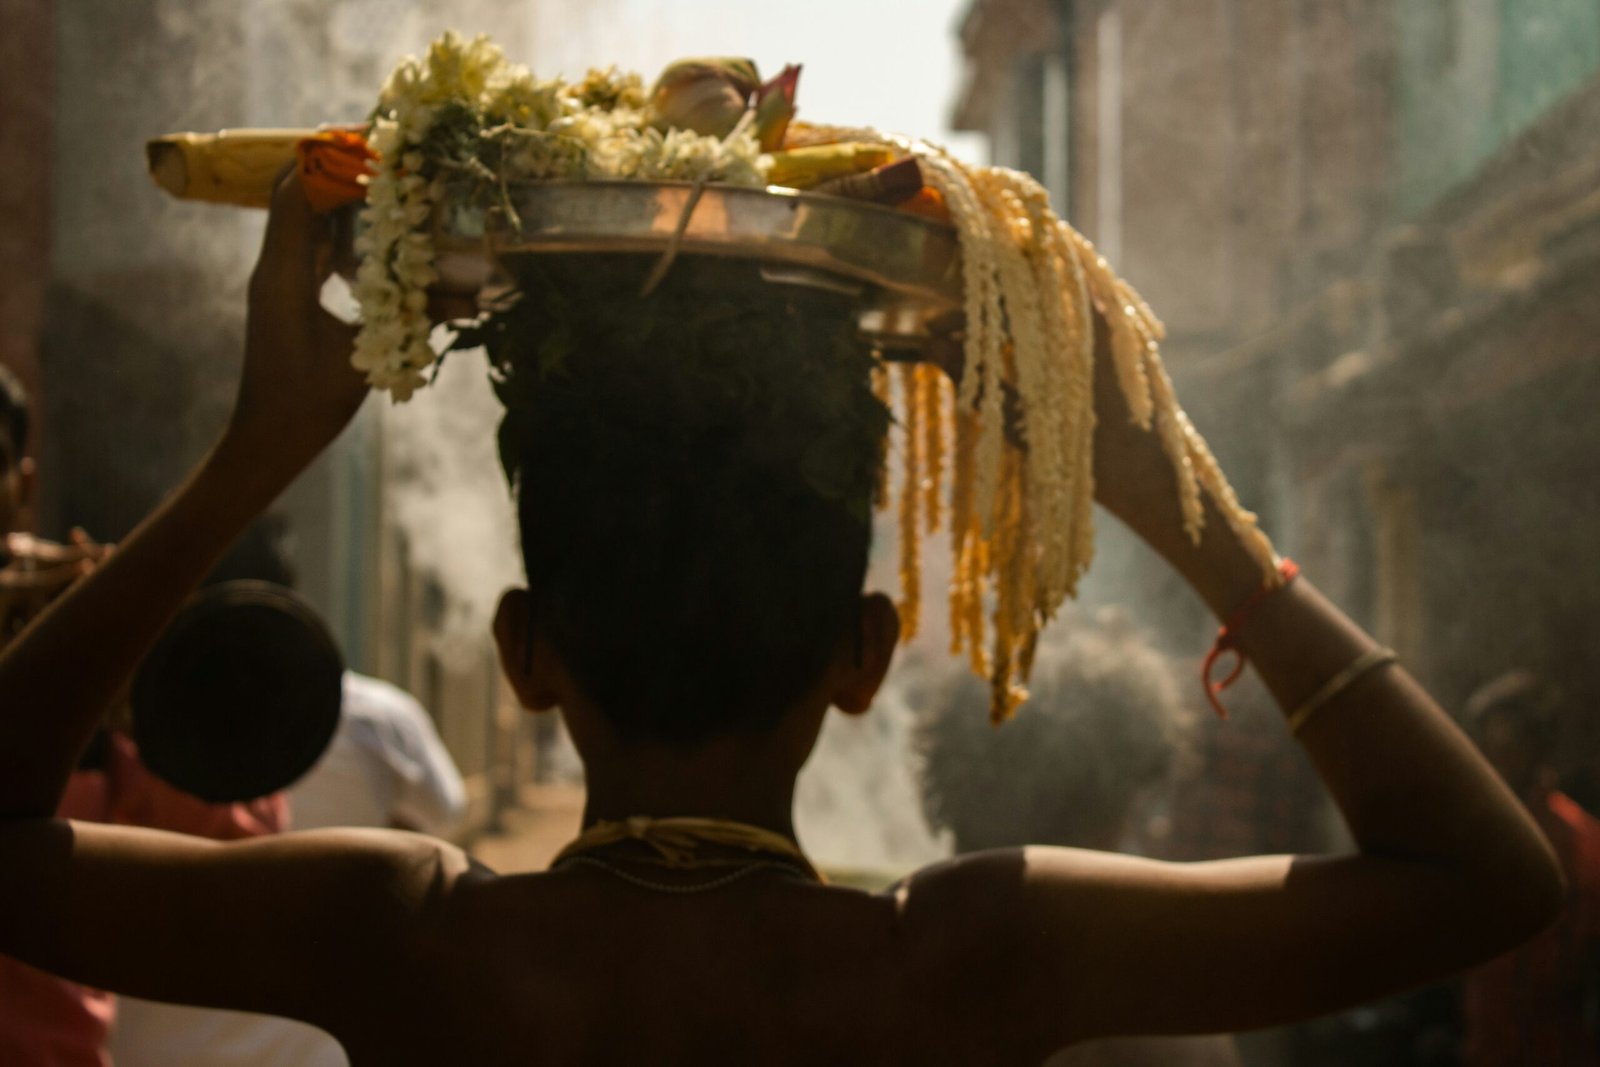 Vedic Hindu Sanskaras,a man carrying a bowl of food on his head